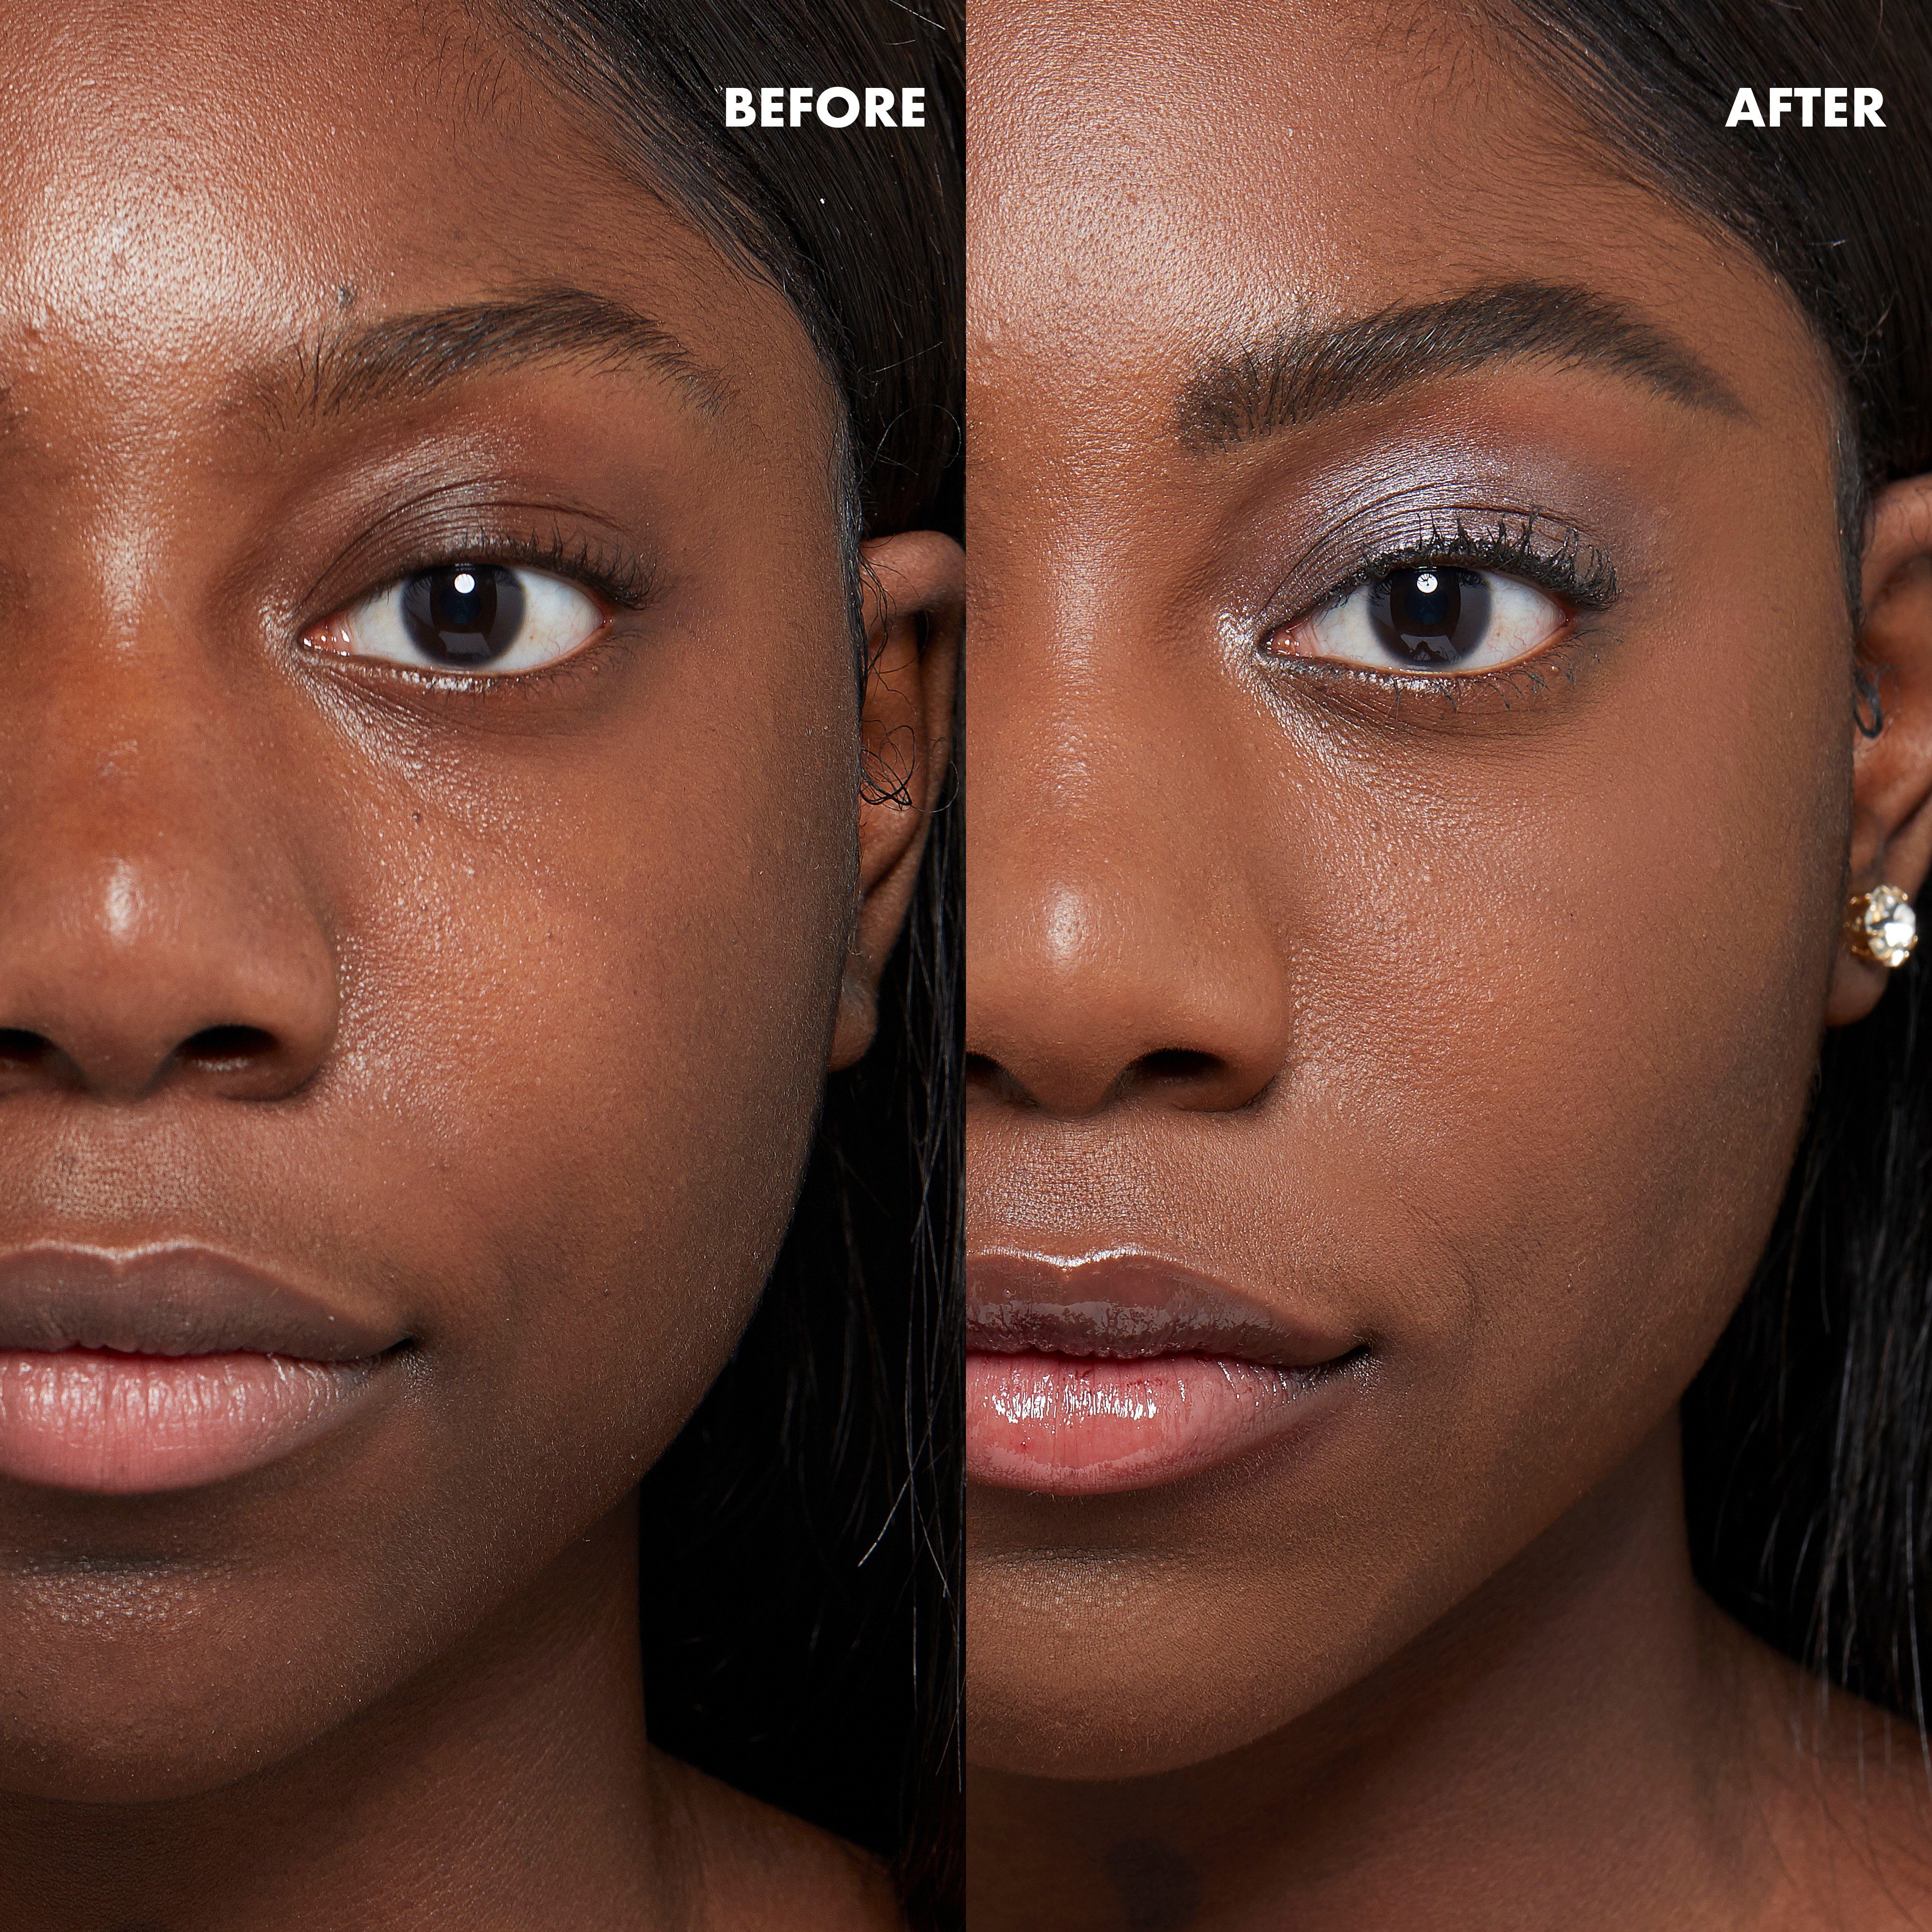 Smooth NYX Mallow Makeup Primer Professional Primer NYX Marsh